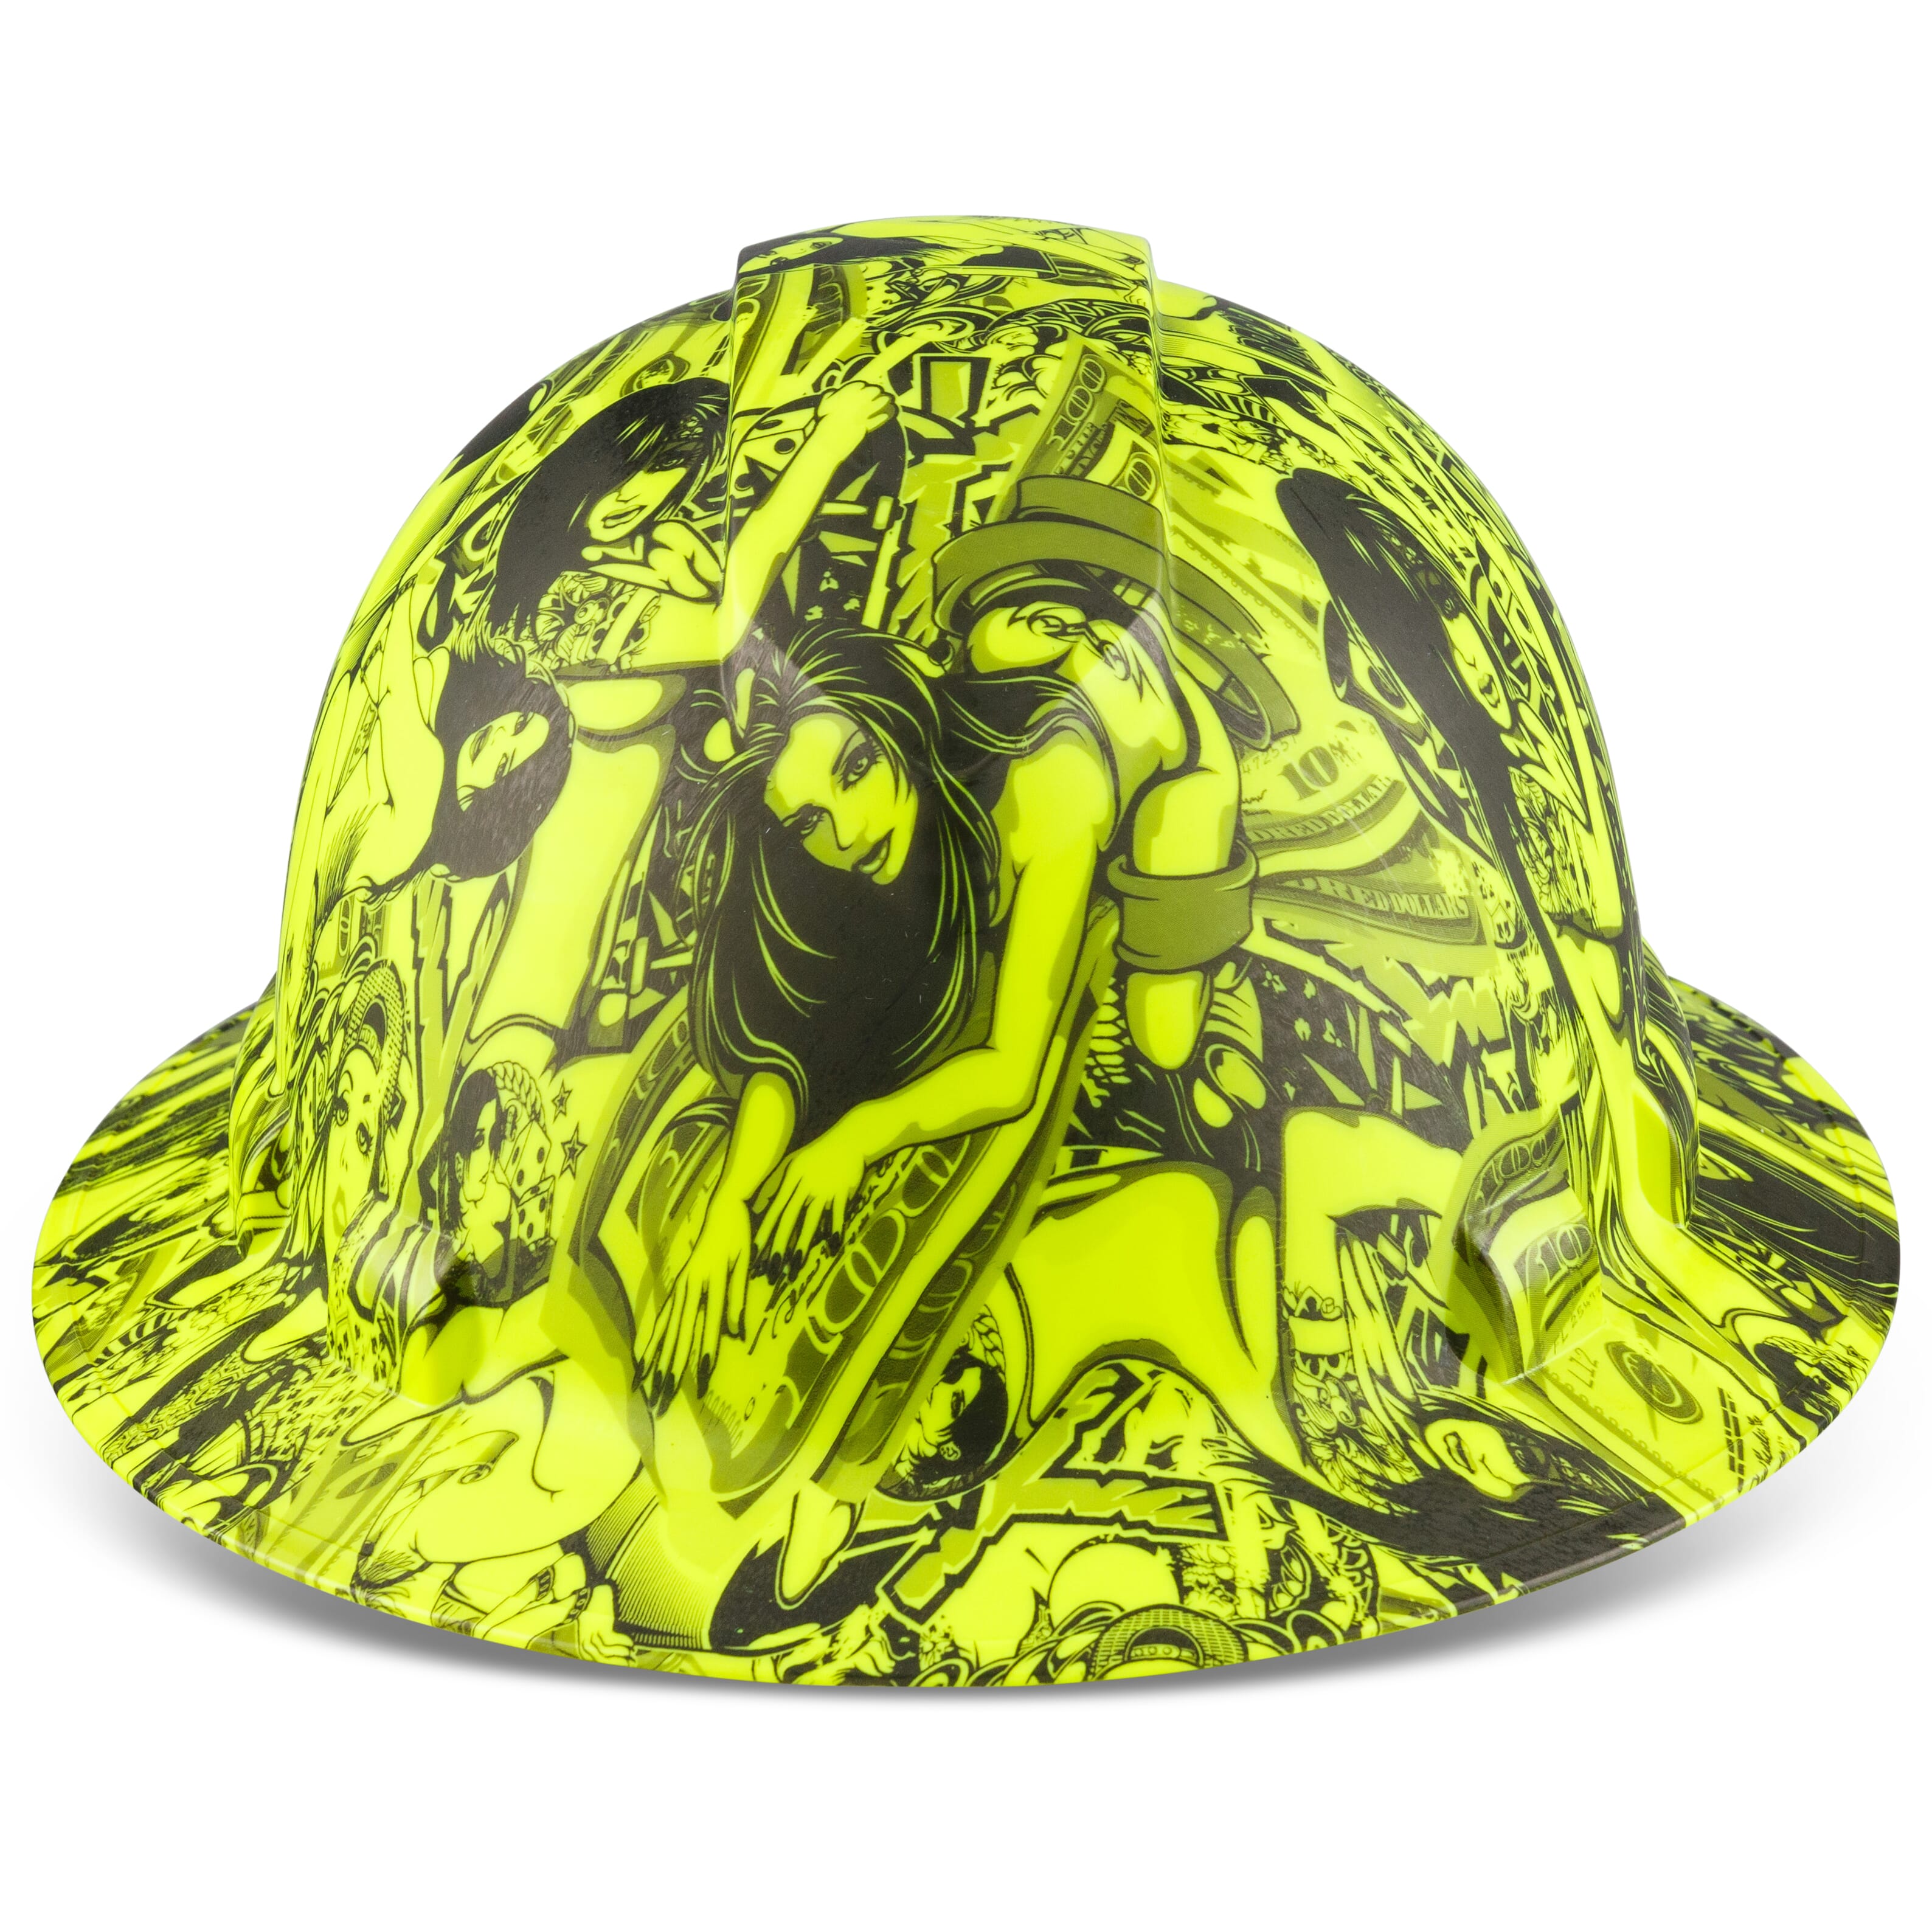 Full Brim Pyramex Hi Vis Lime Hard Hat, Custom Money And Honeys Design, Safety Helmet, 6 Point